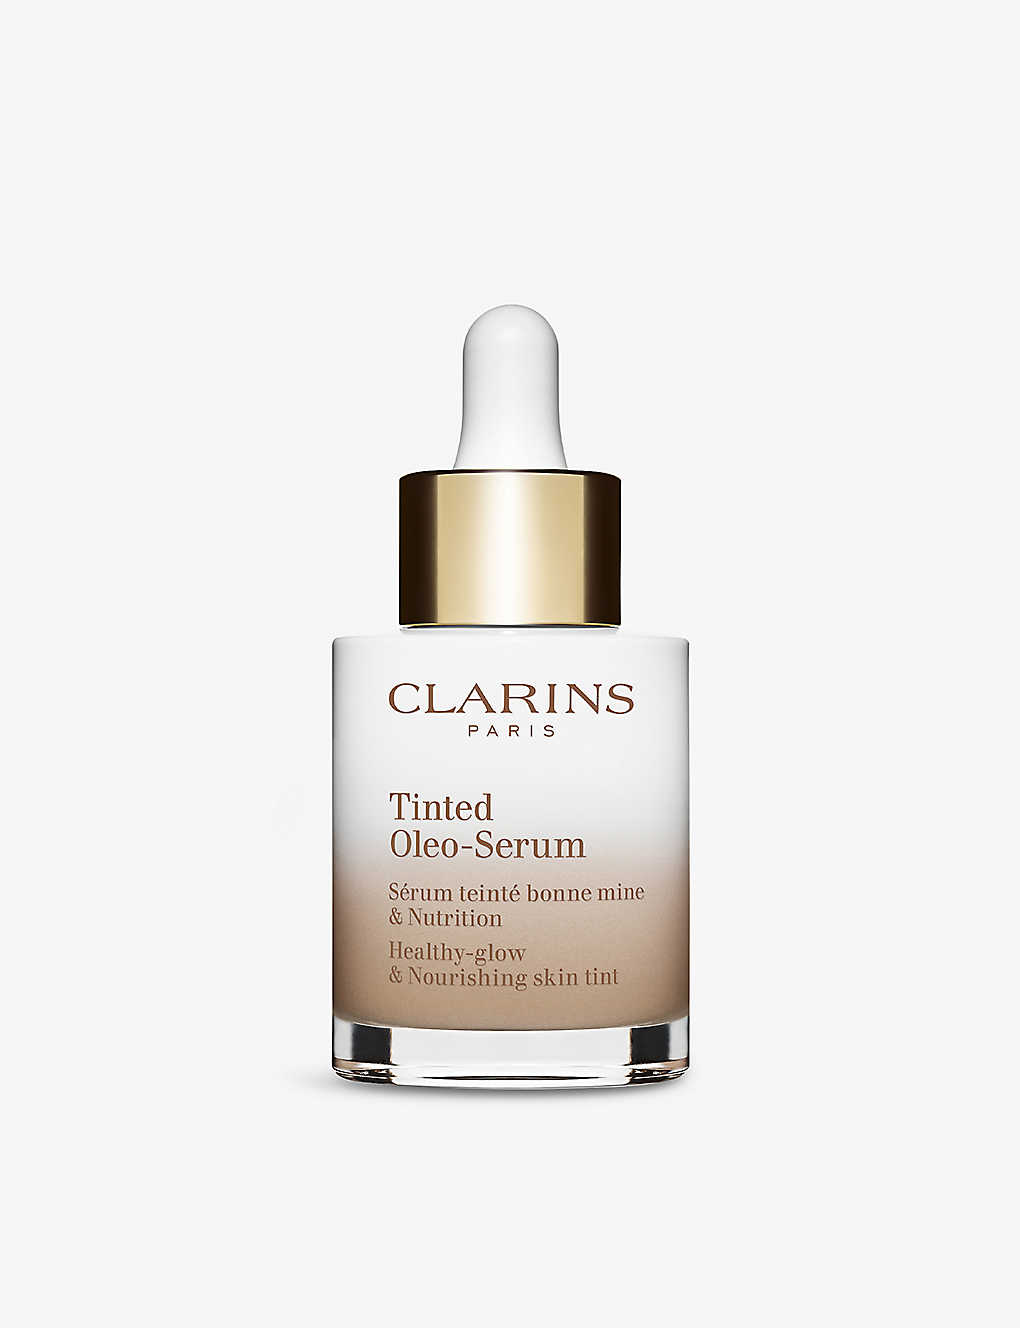 Clarins 3 Tinted Oleo-serum 01 Skin Tint 30ml